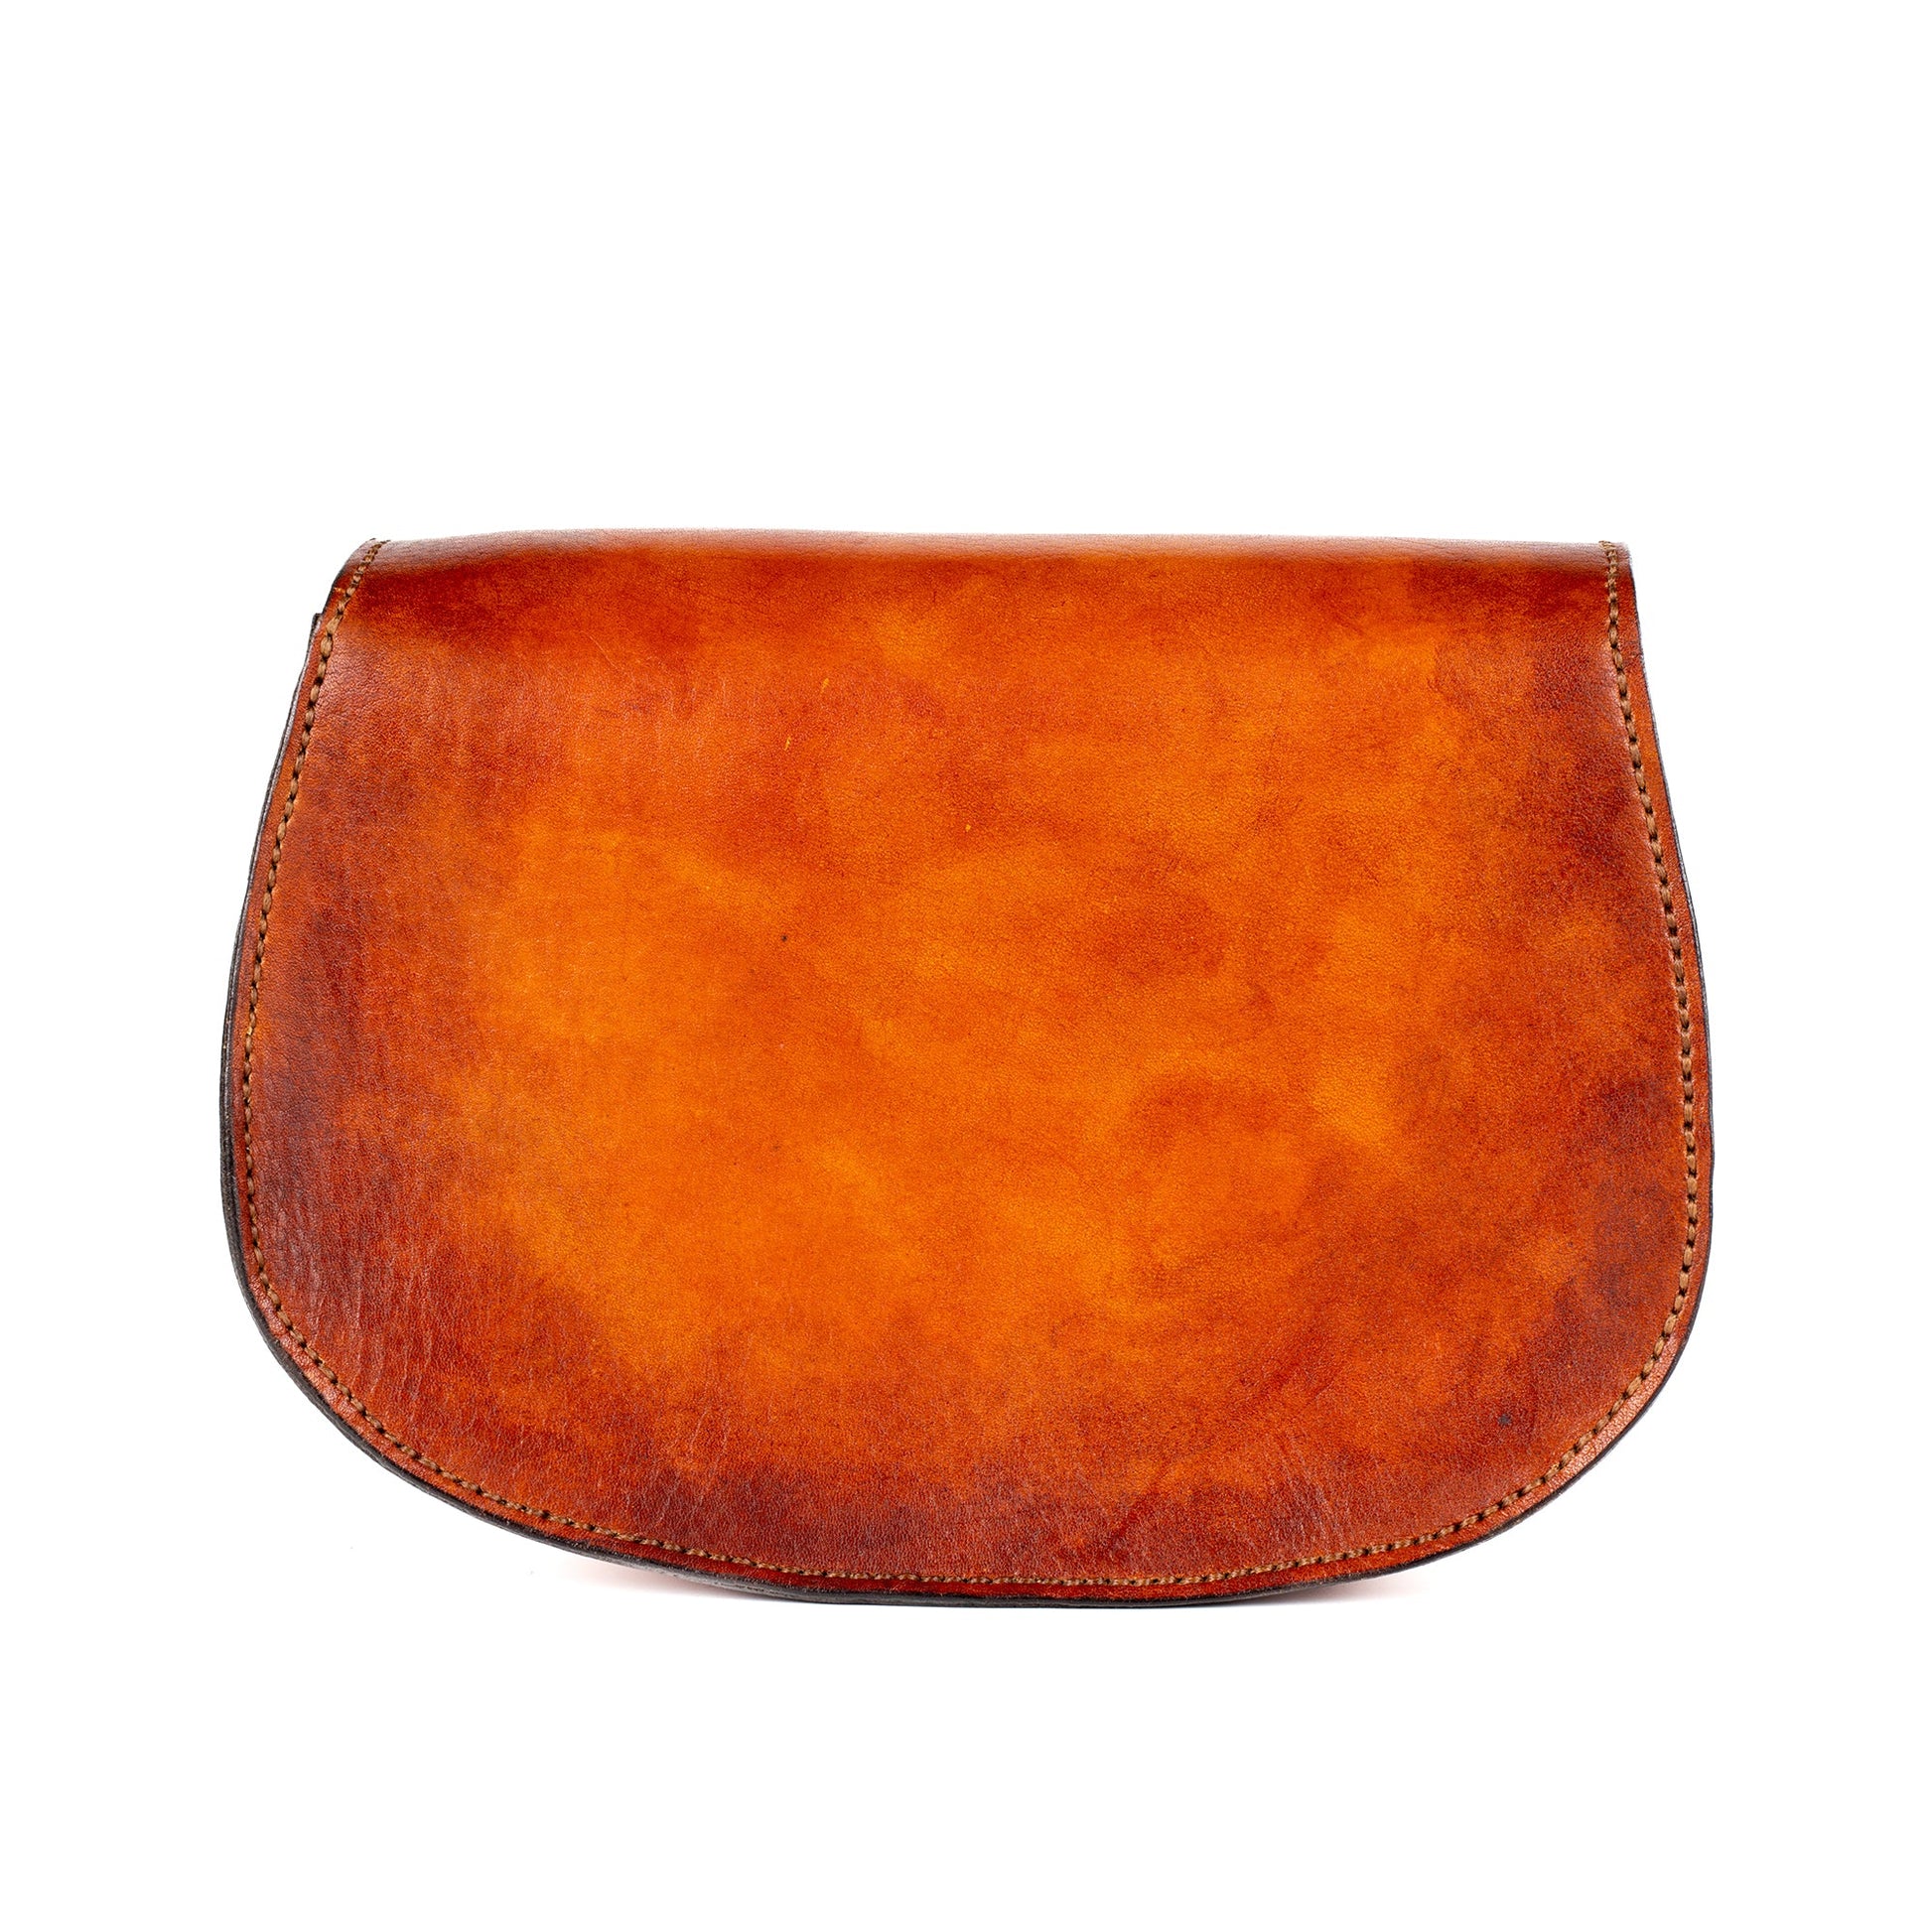 Kilidos Leather Carved & Crafted Hand Bag - Handbags Zengoda Shop online from Artisan Brands